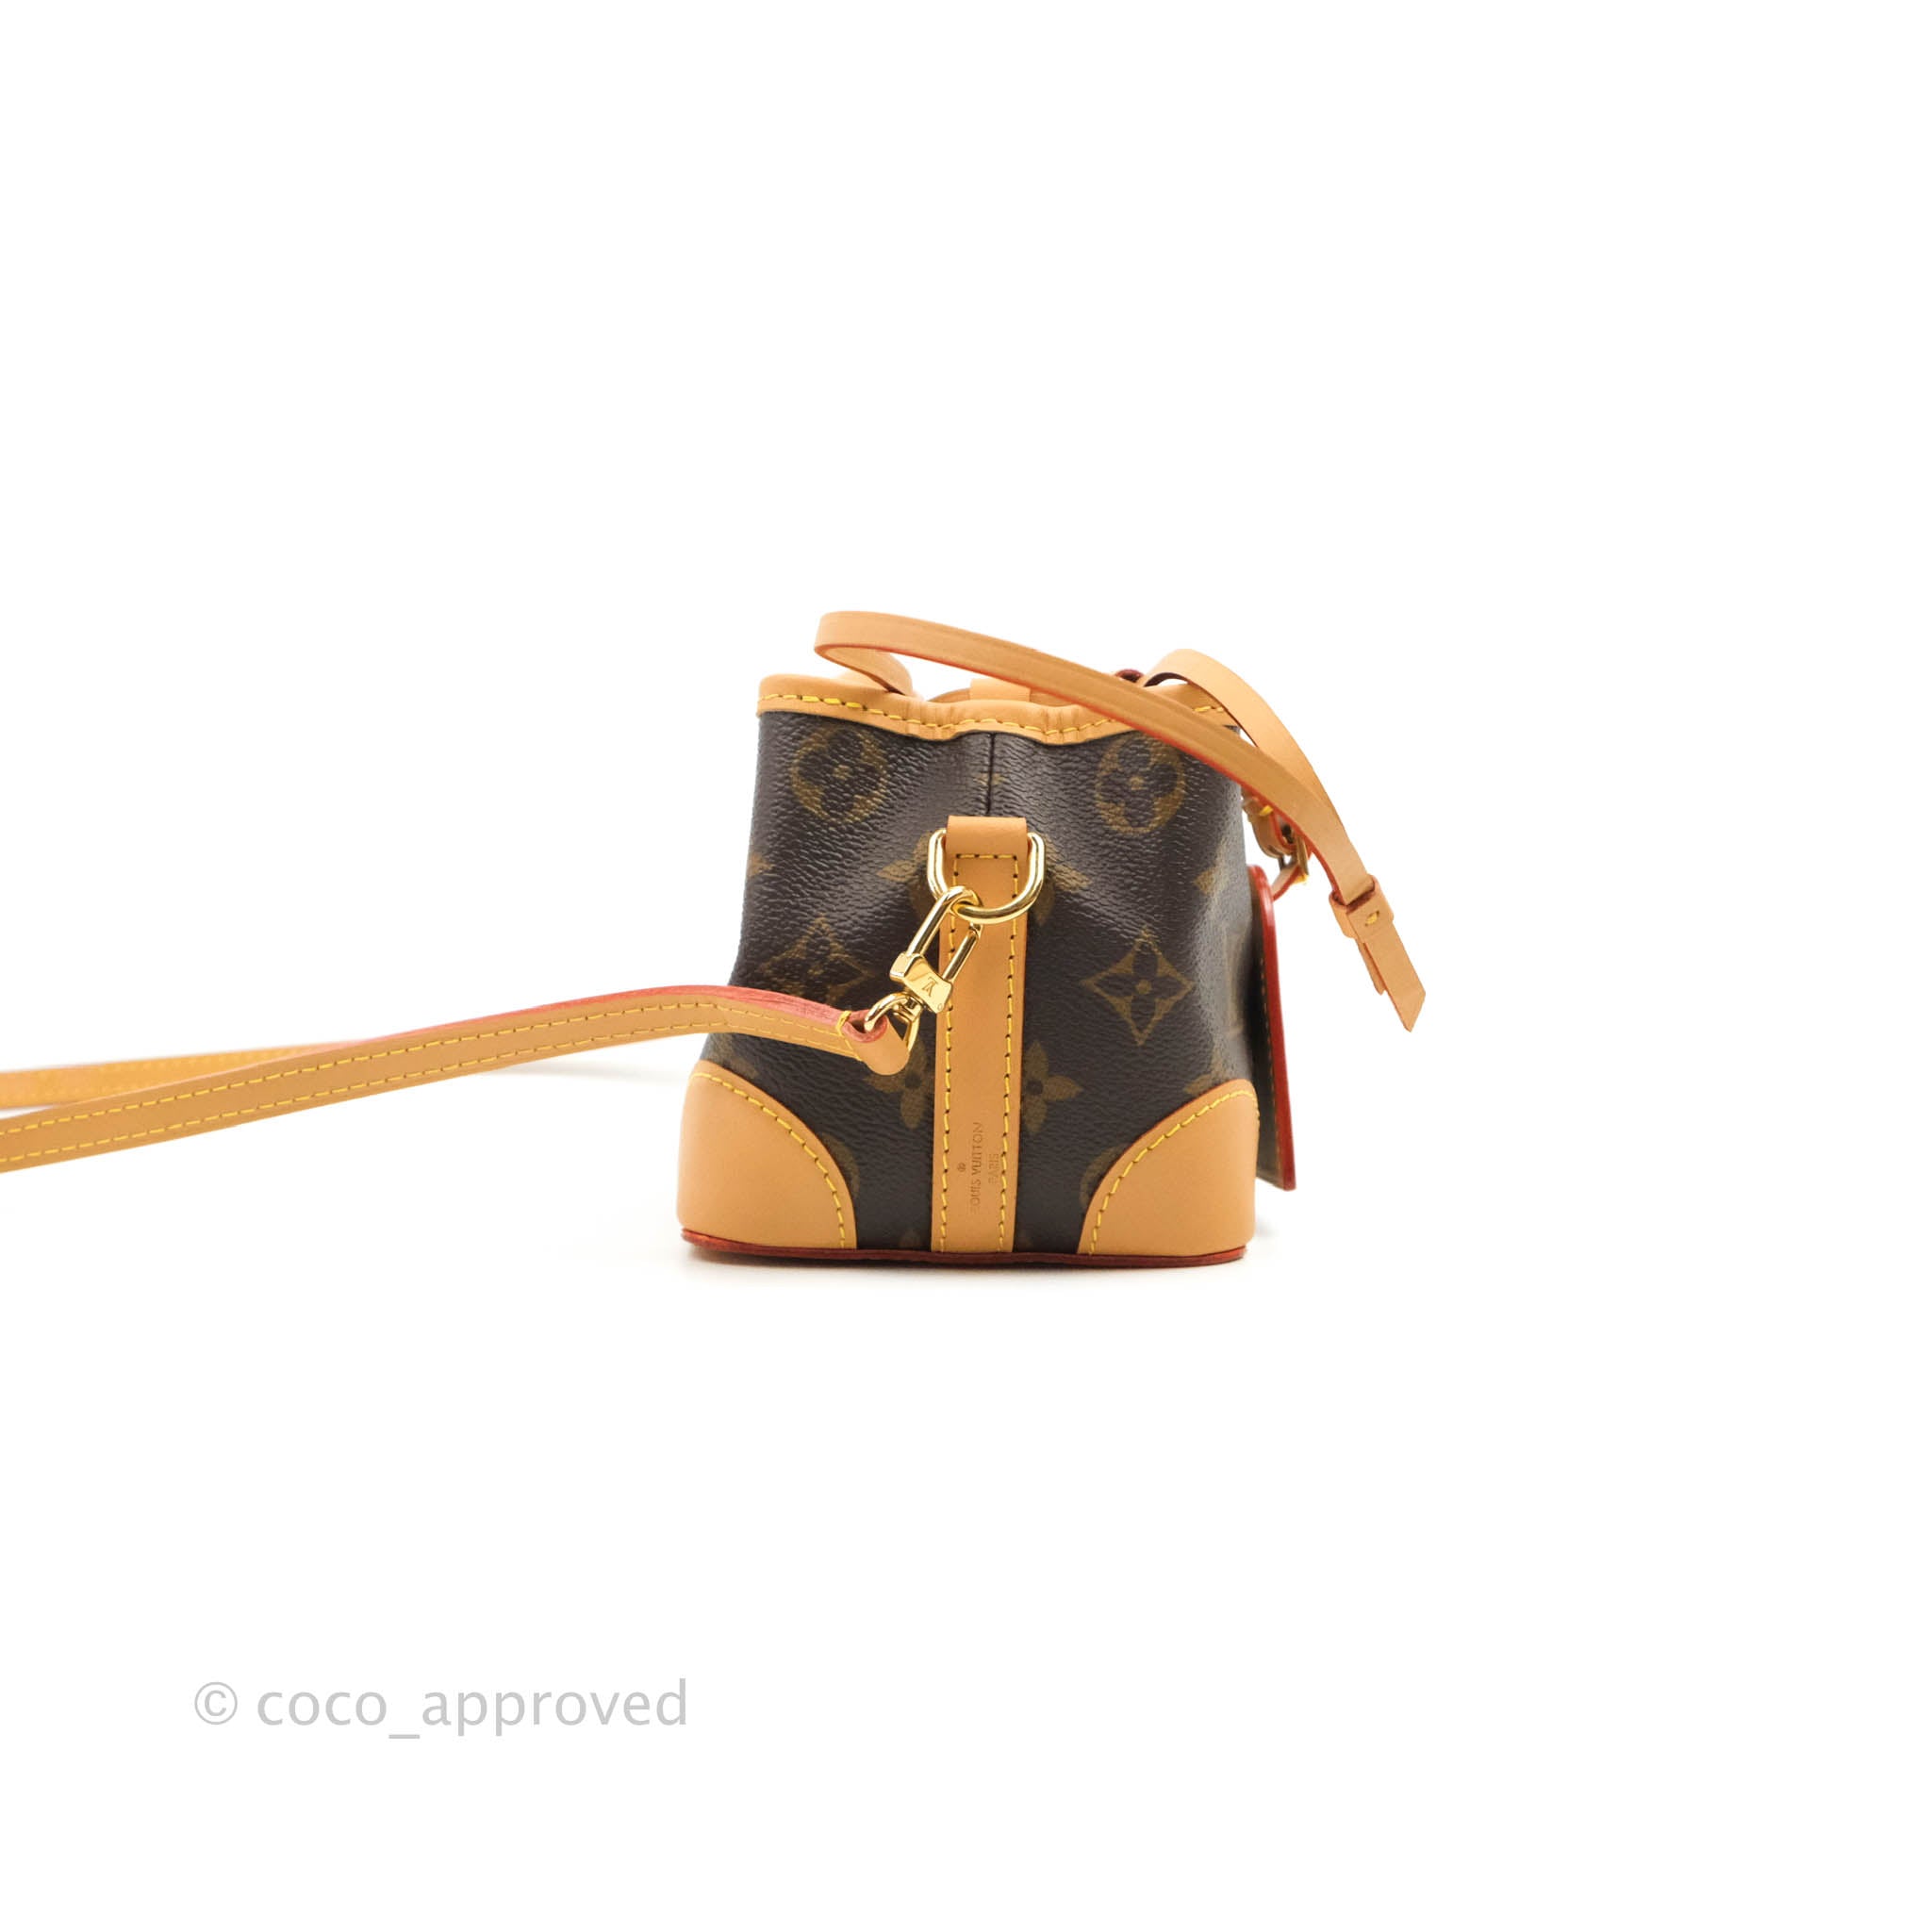 Sold at Auction: Louis Vuitton, Louis Vuitton Mini Noe Luois Vuitton handbag